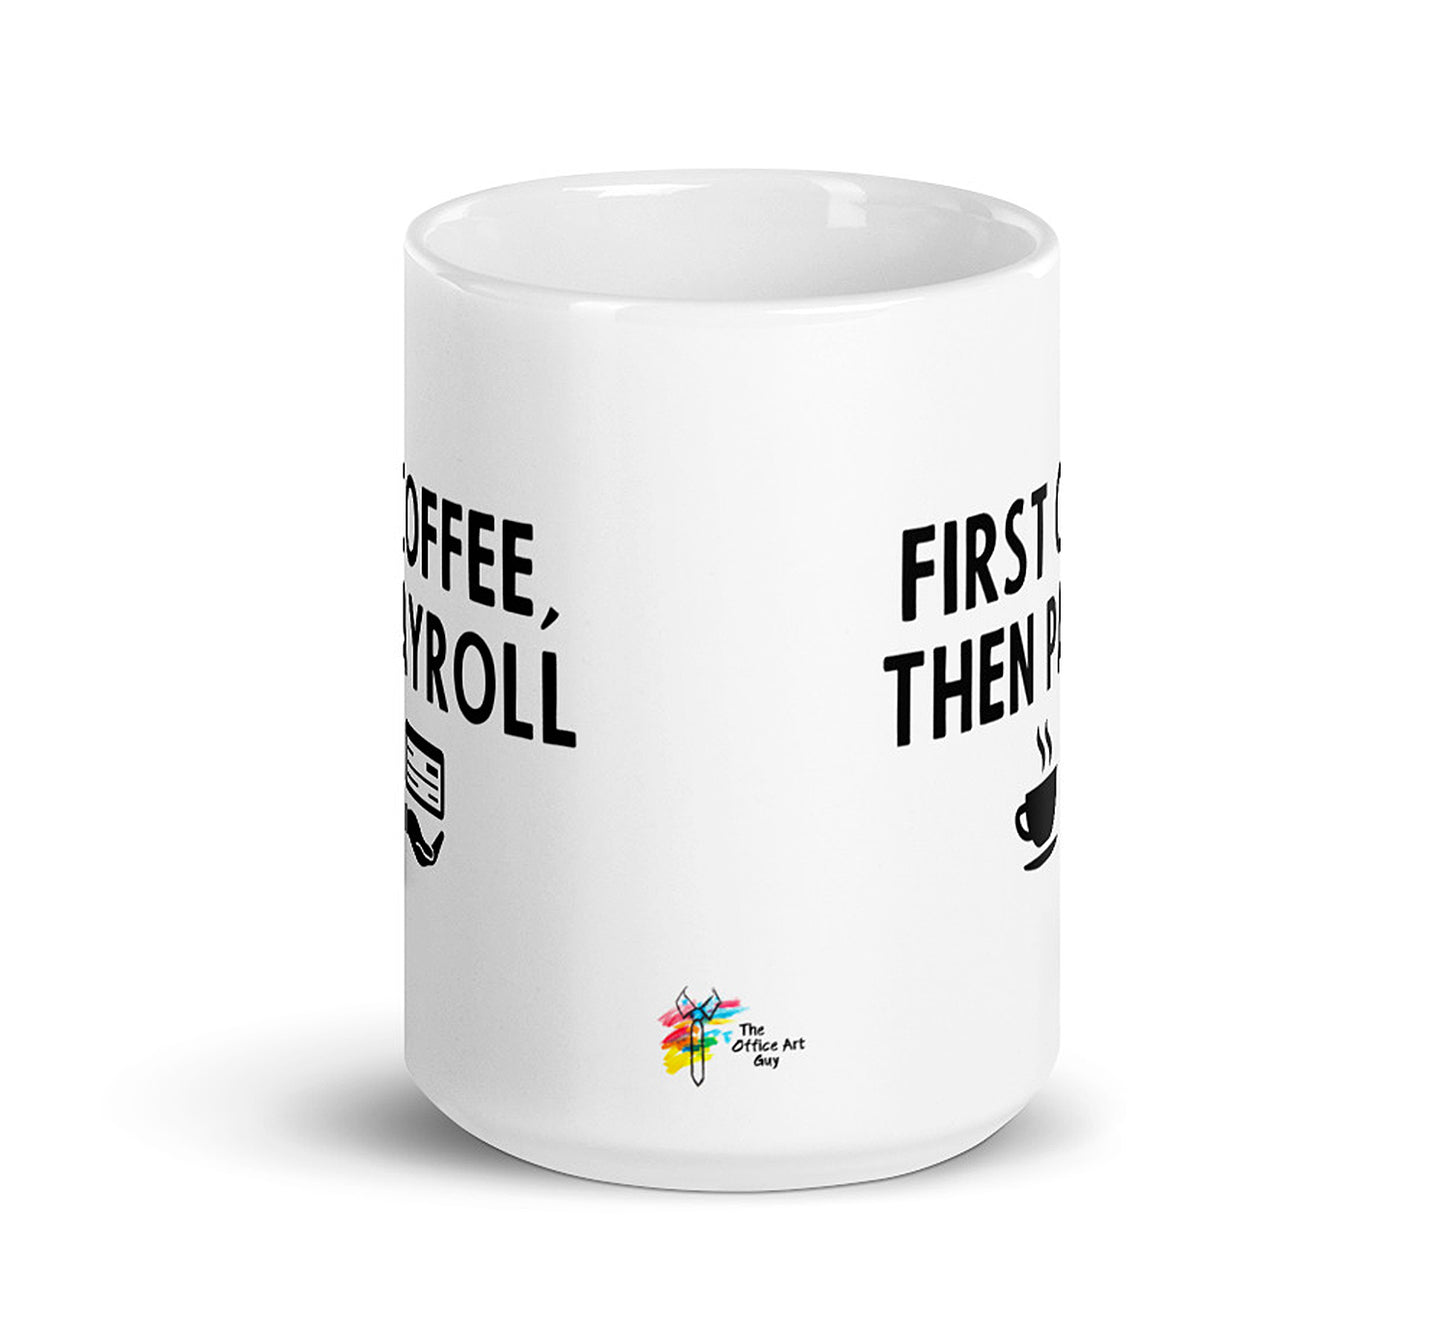 Payroll Mug First Coffee Then Payroll